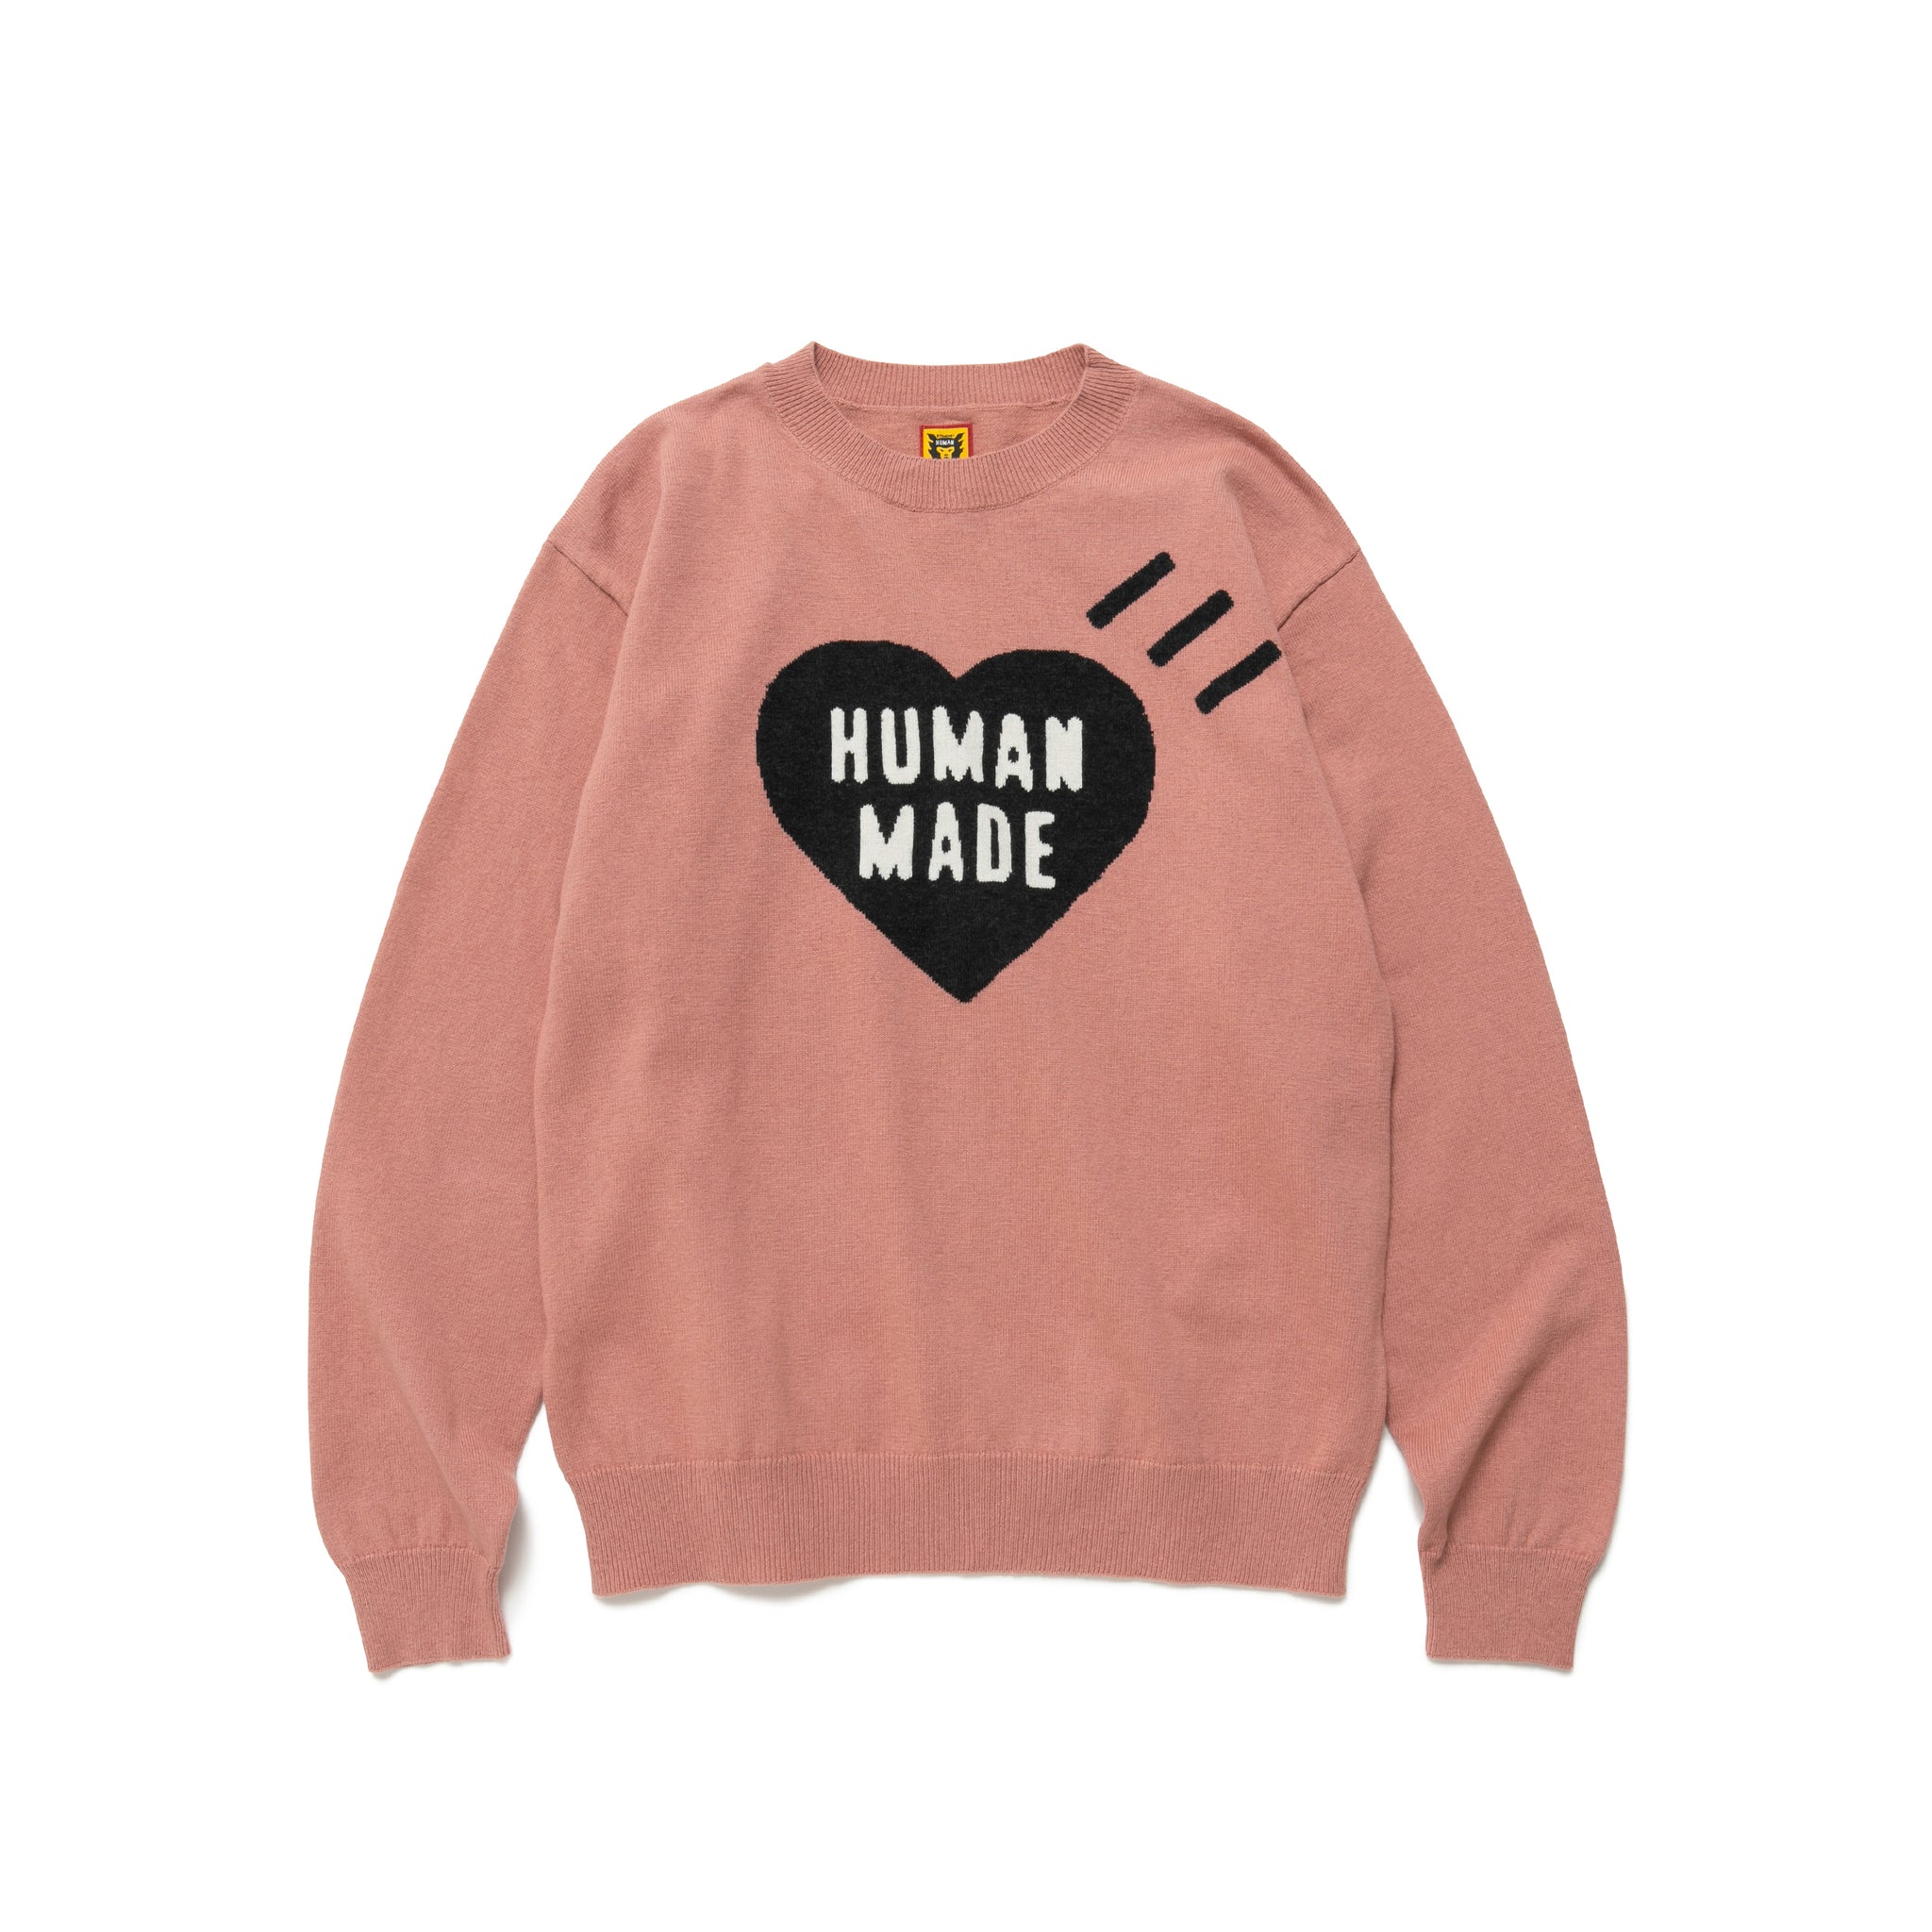 Human made heart knit sweater - ニット/セーター